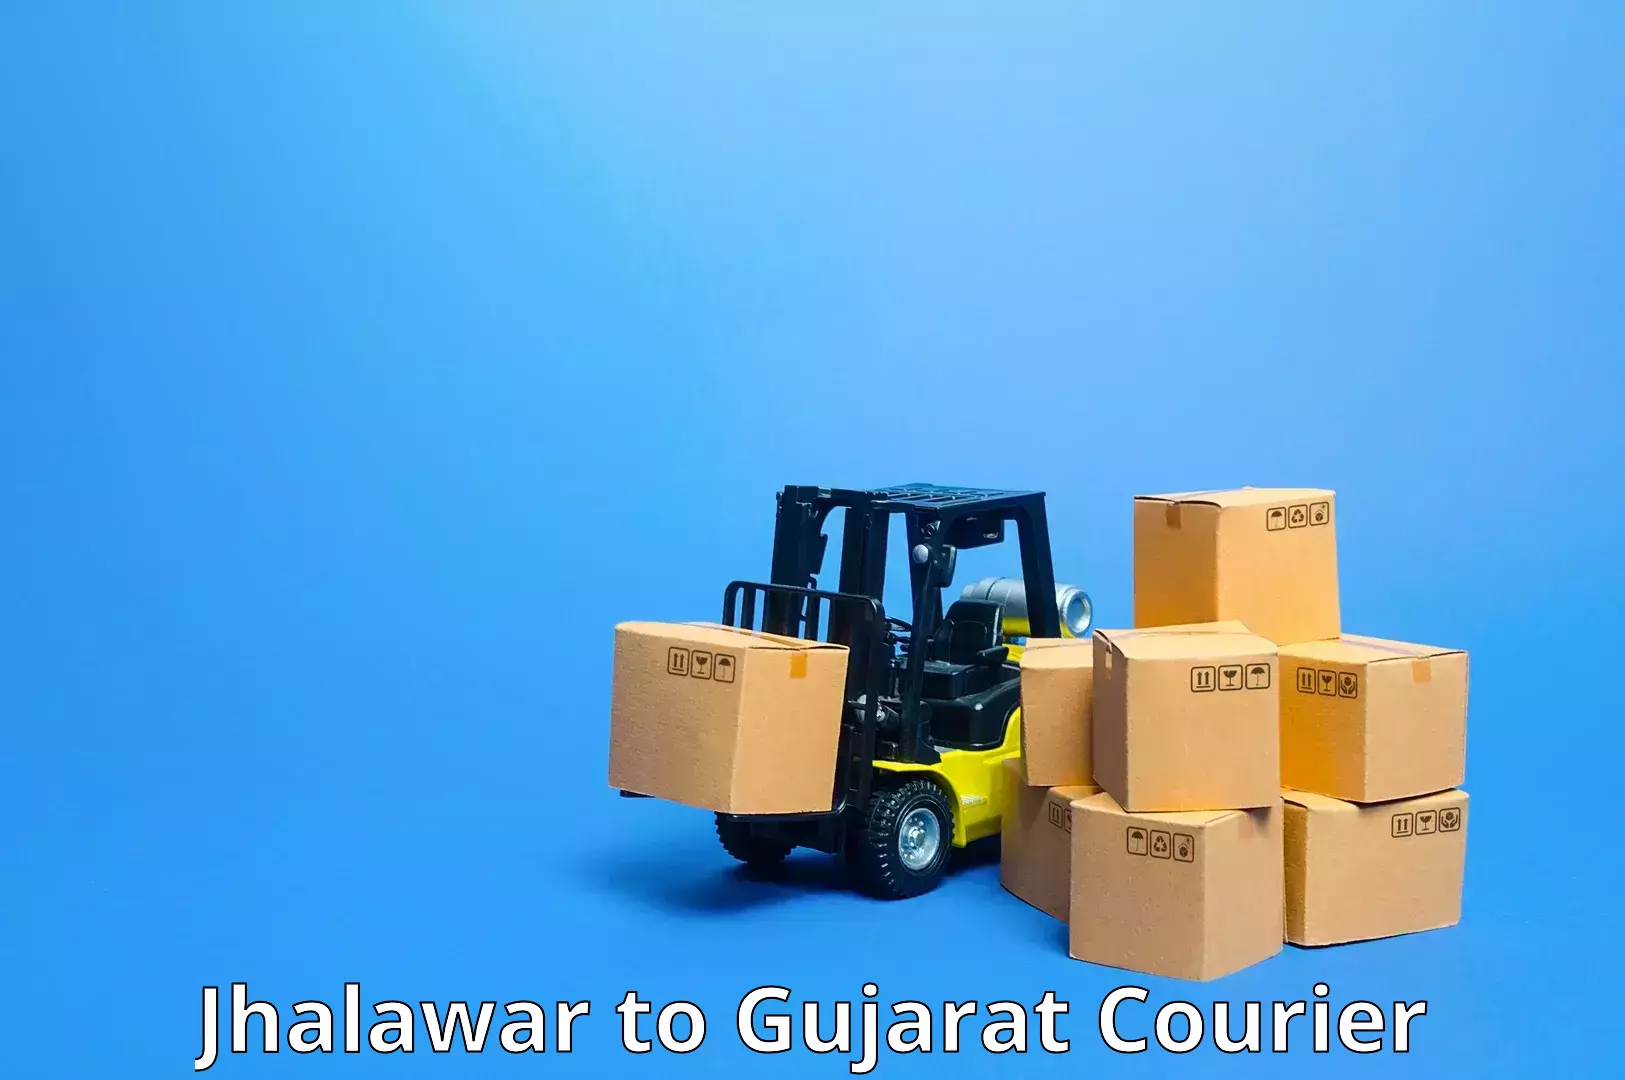 Courier service comparison Jhalawar to Kandla Port